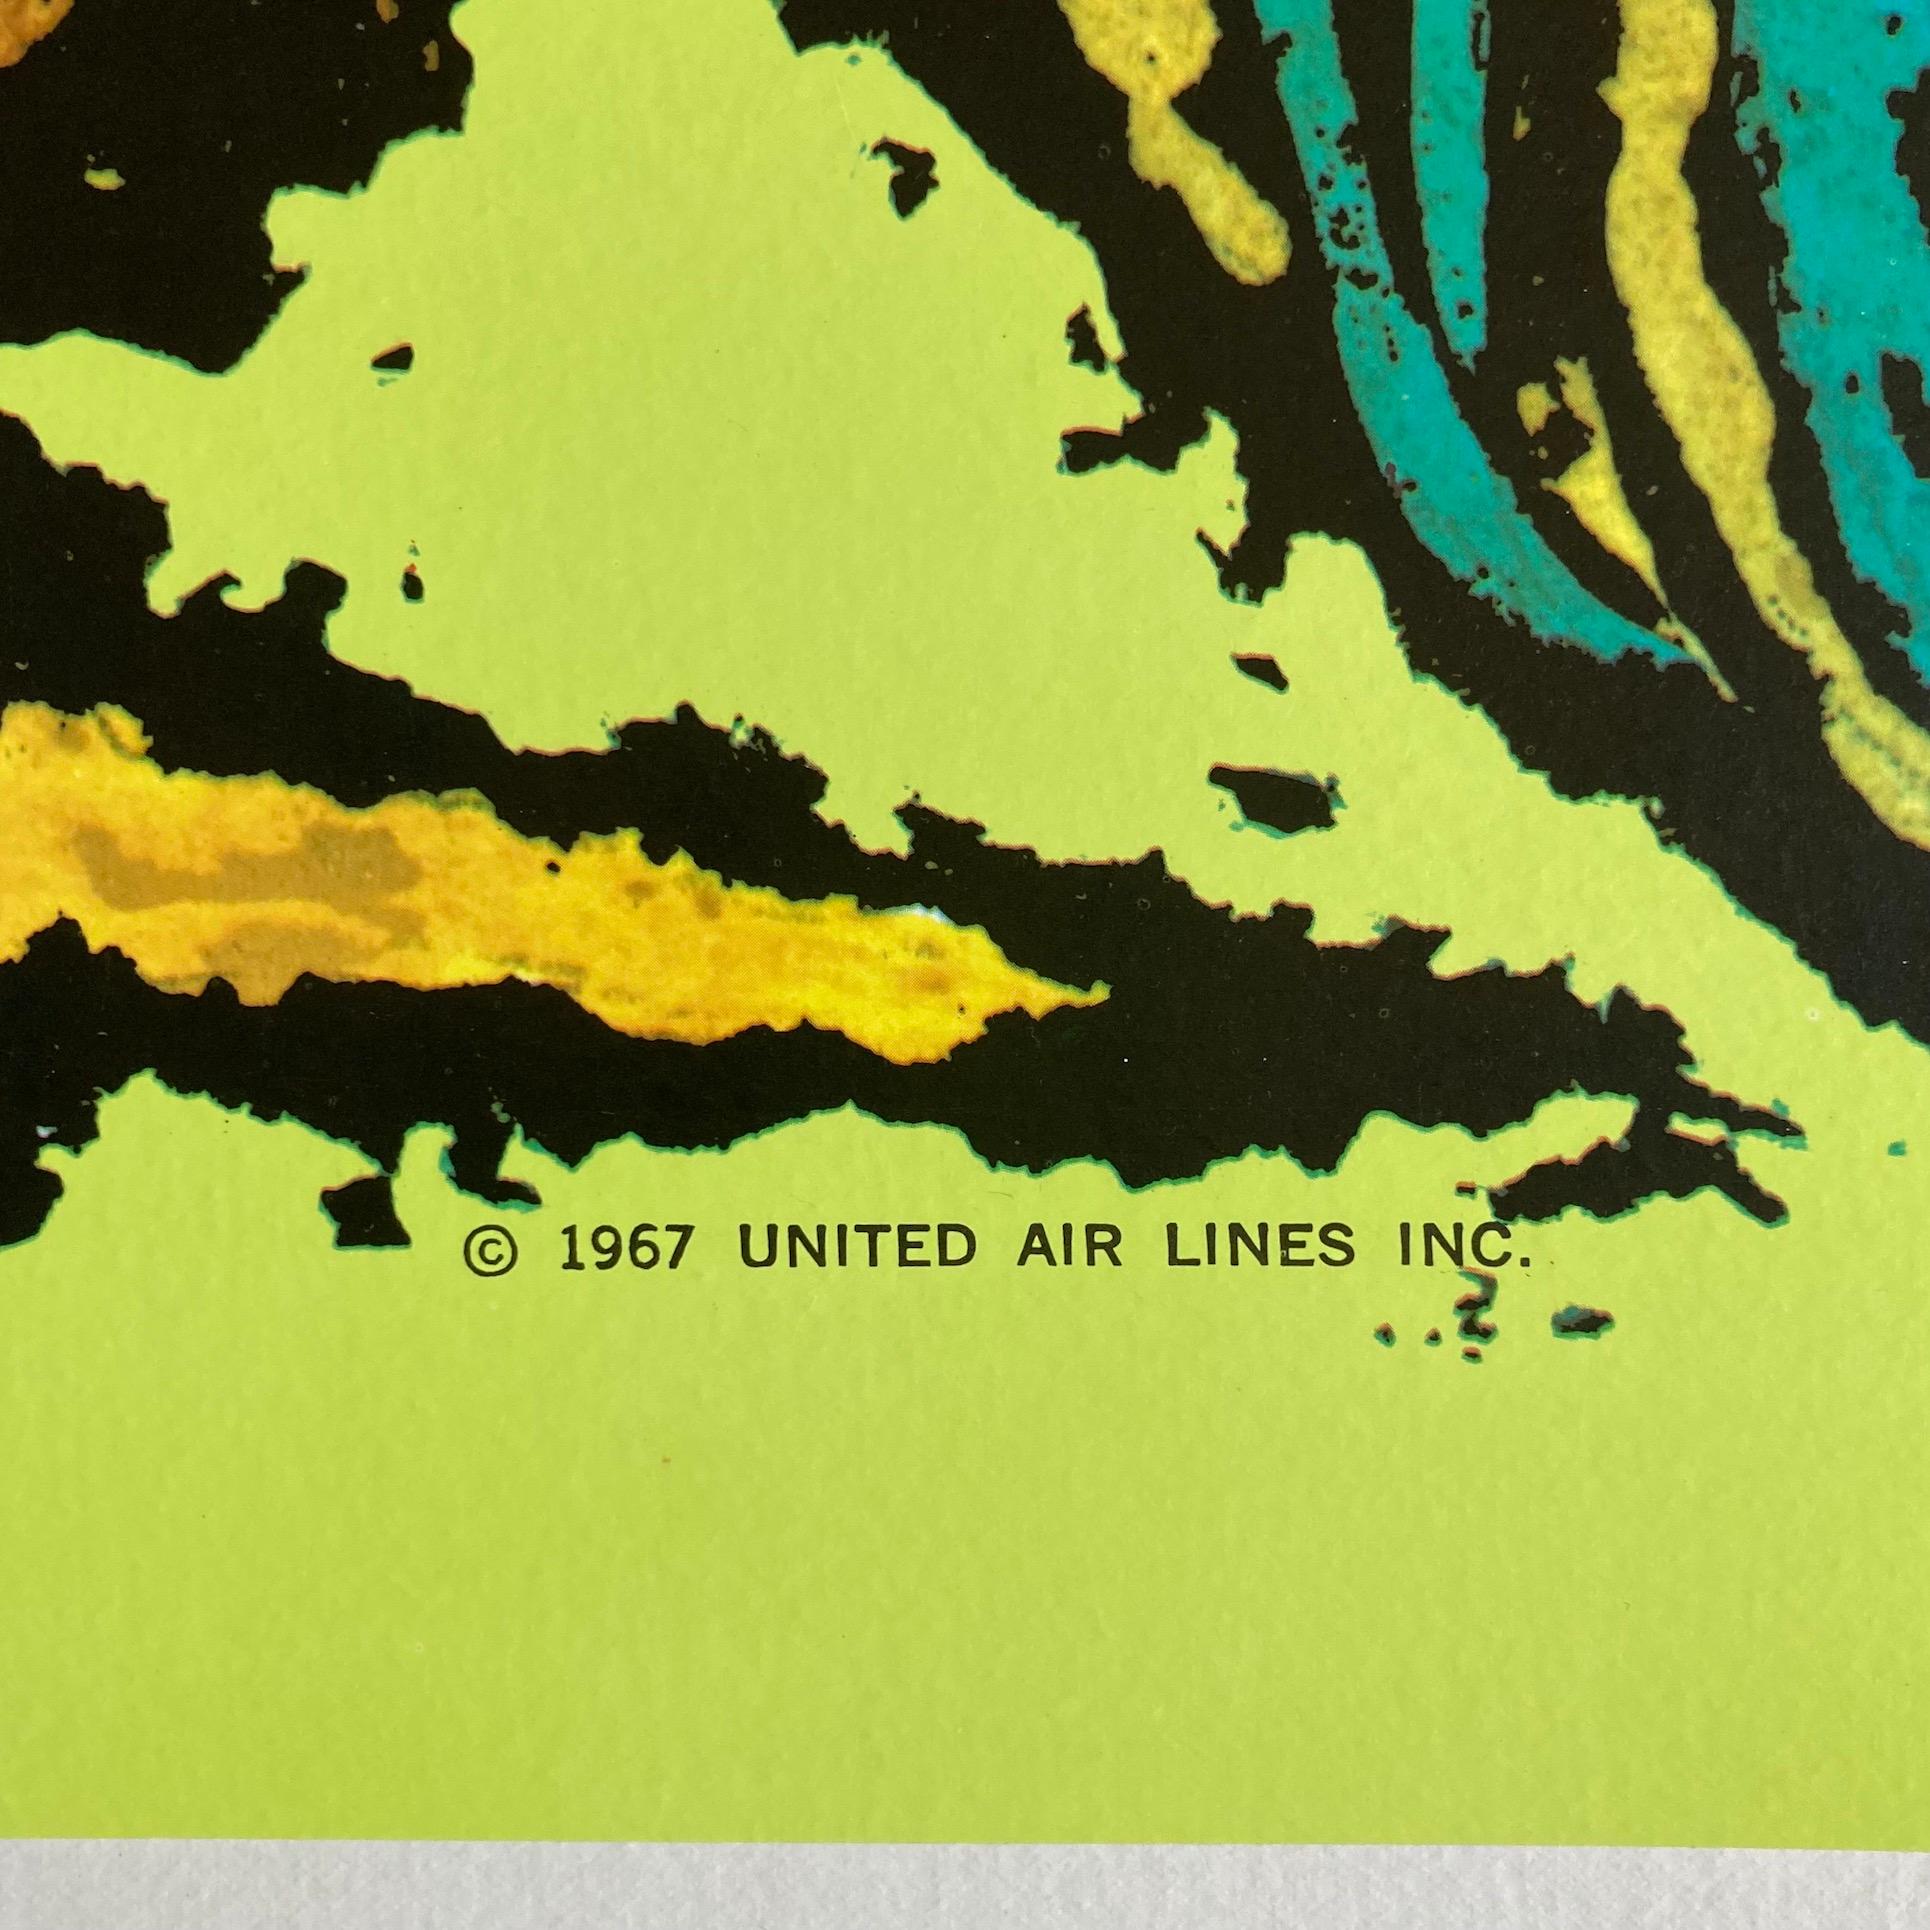 Linen Original Hawaii 1960s United Air Lines Travel Poster, James Jebavy